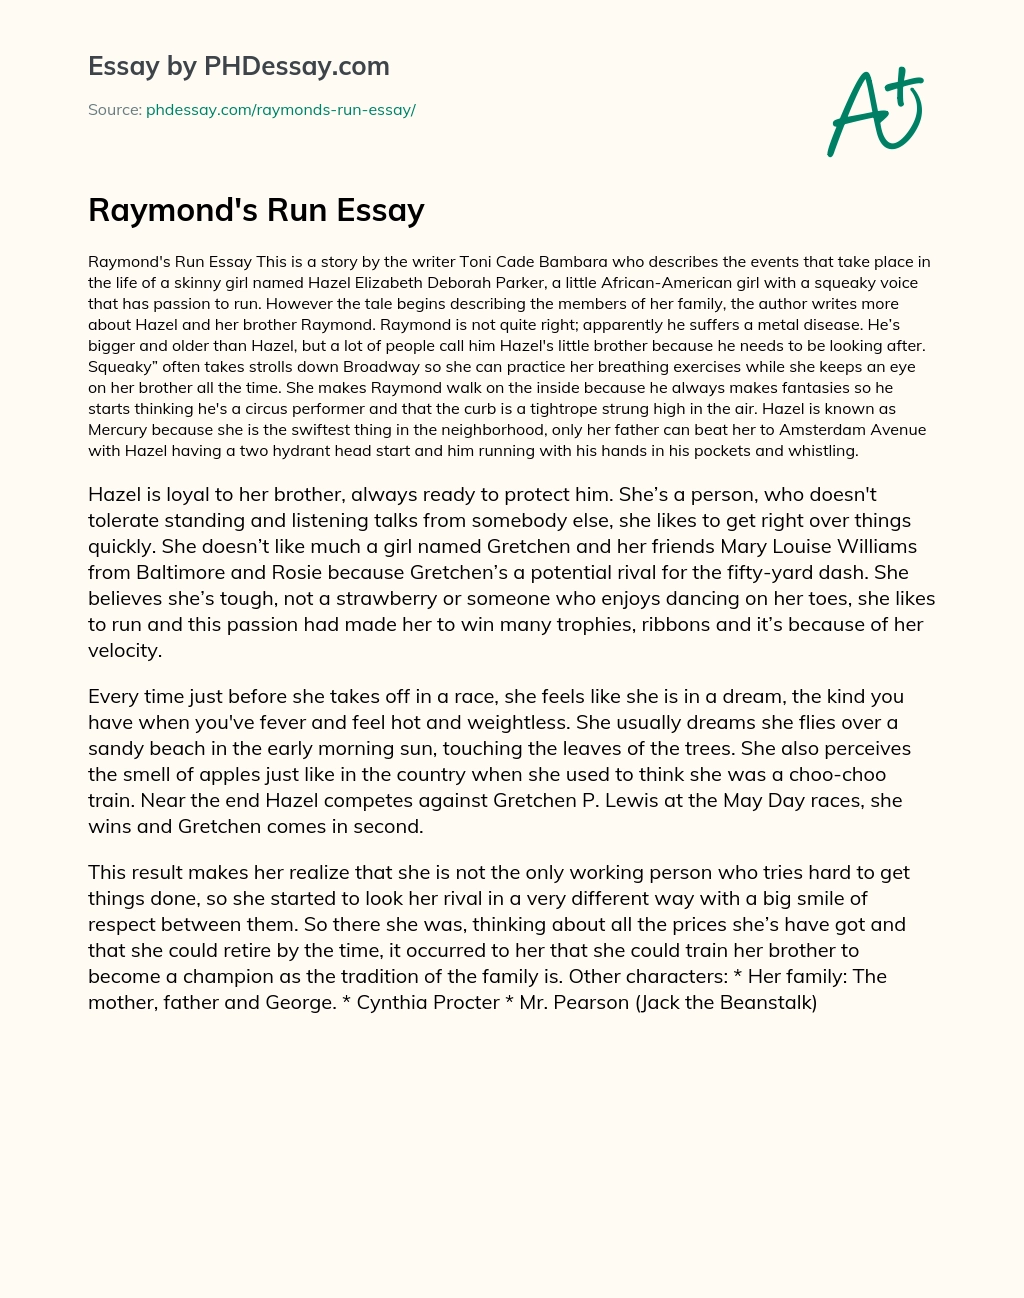 Raymond’s Run Essay essay